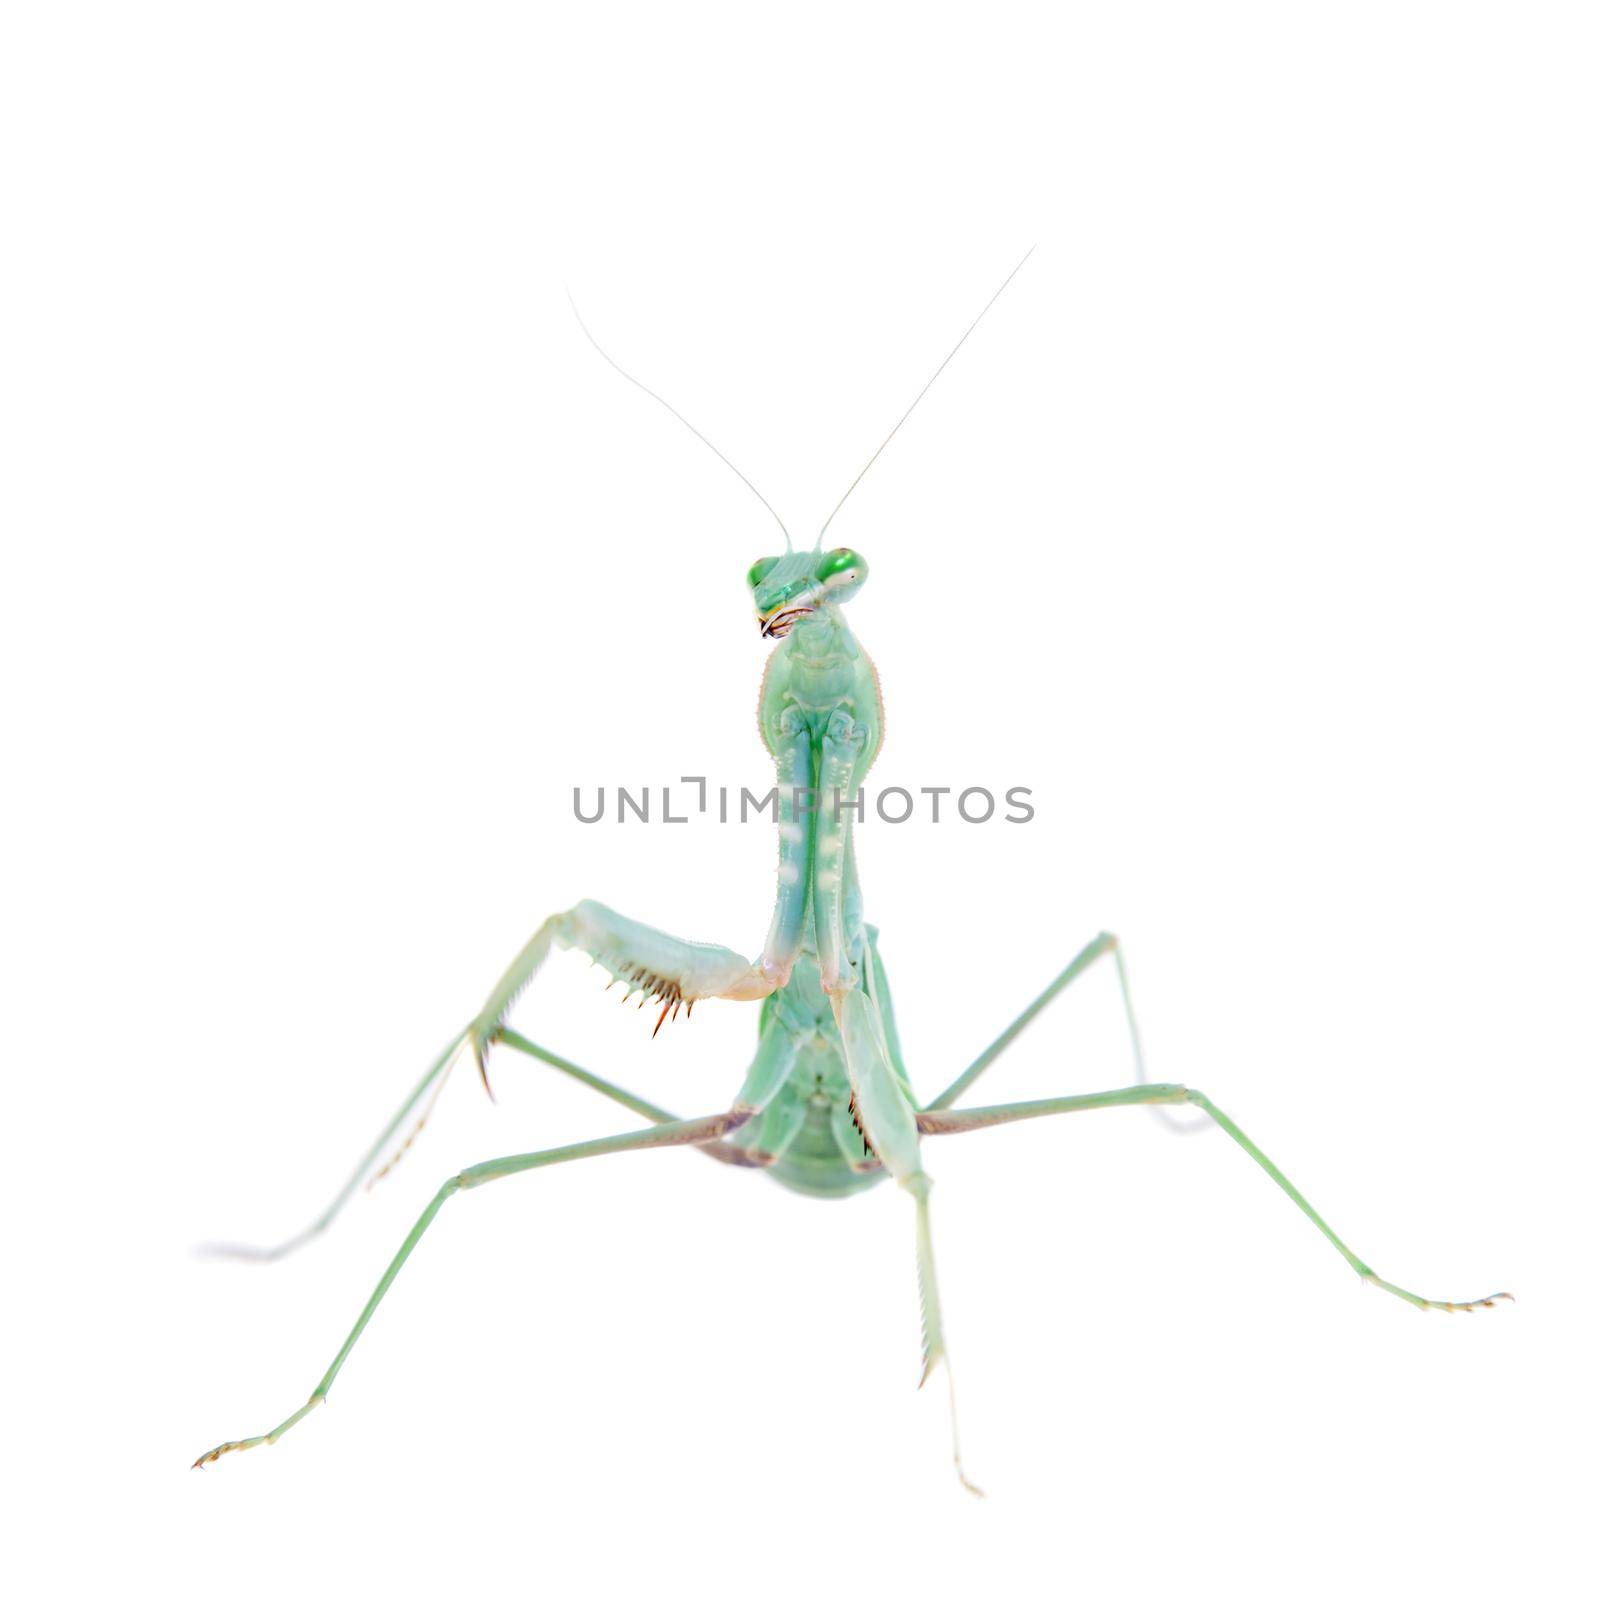 Giant african mantis, Sphodromantis viridis, on white by RosaJay